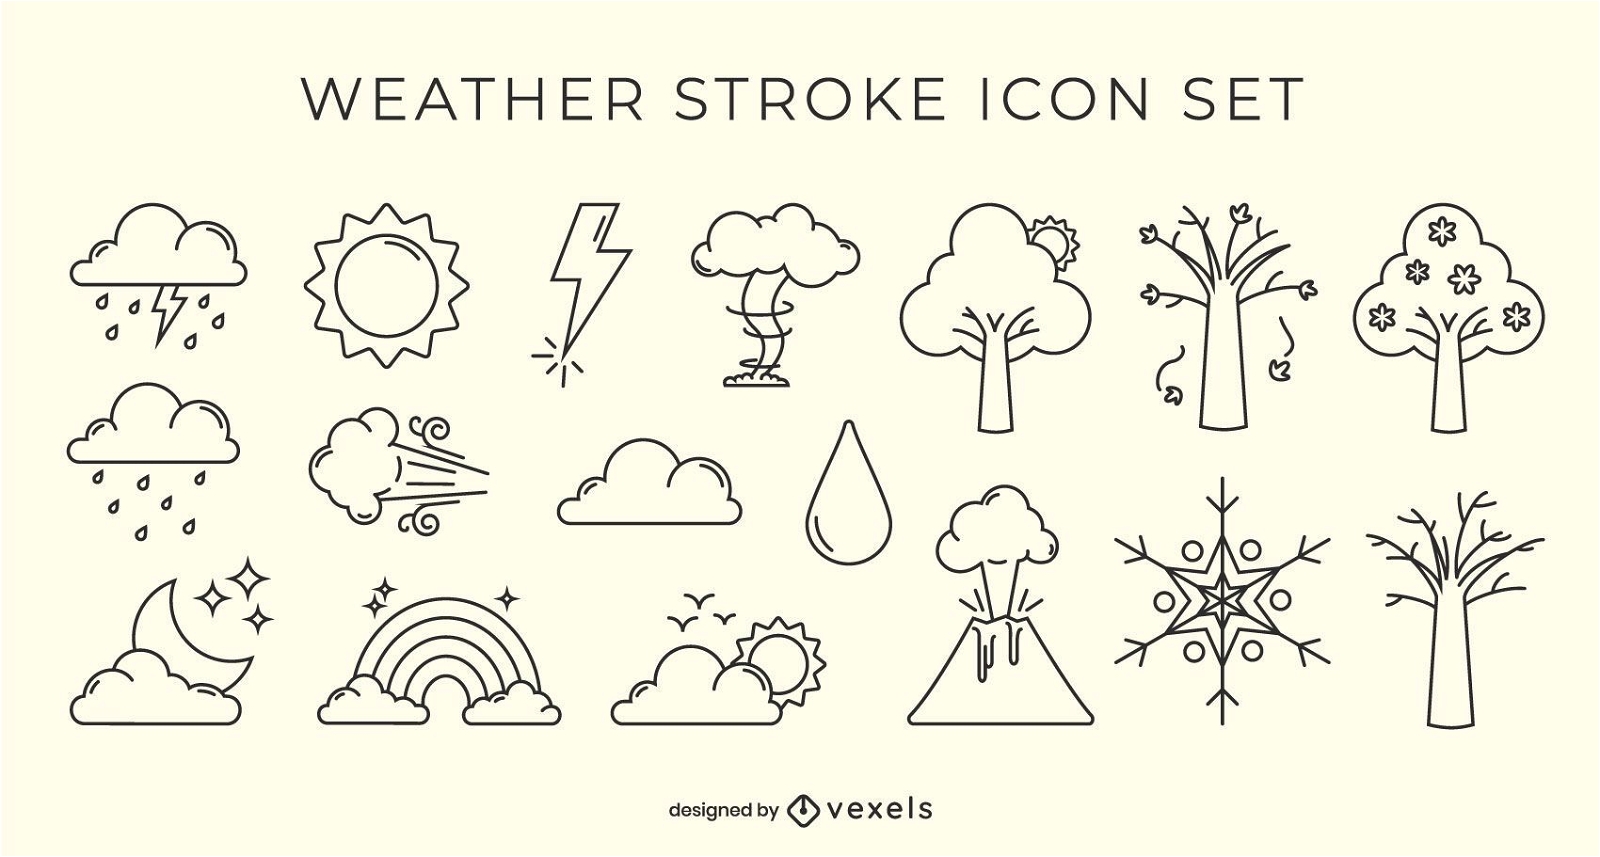 Weather stroke icon set